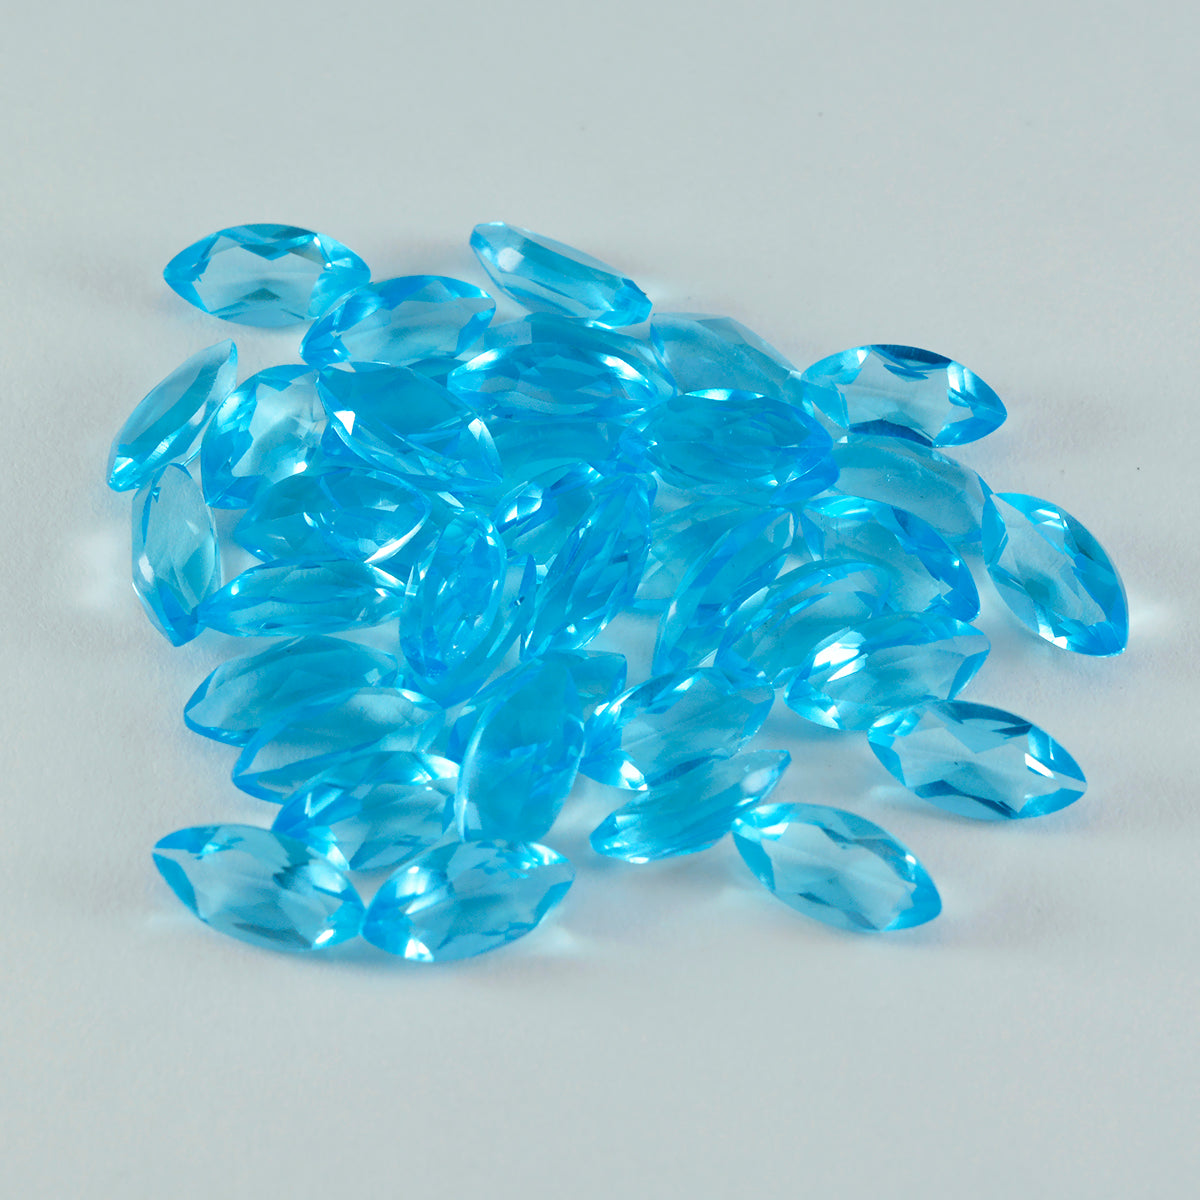 riyogems 1 st blå topas cz facetterad 6x12 mm marquise form söt kvalitetssten